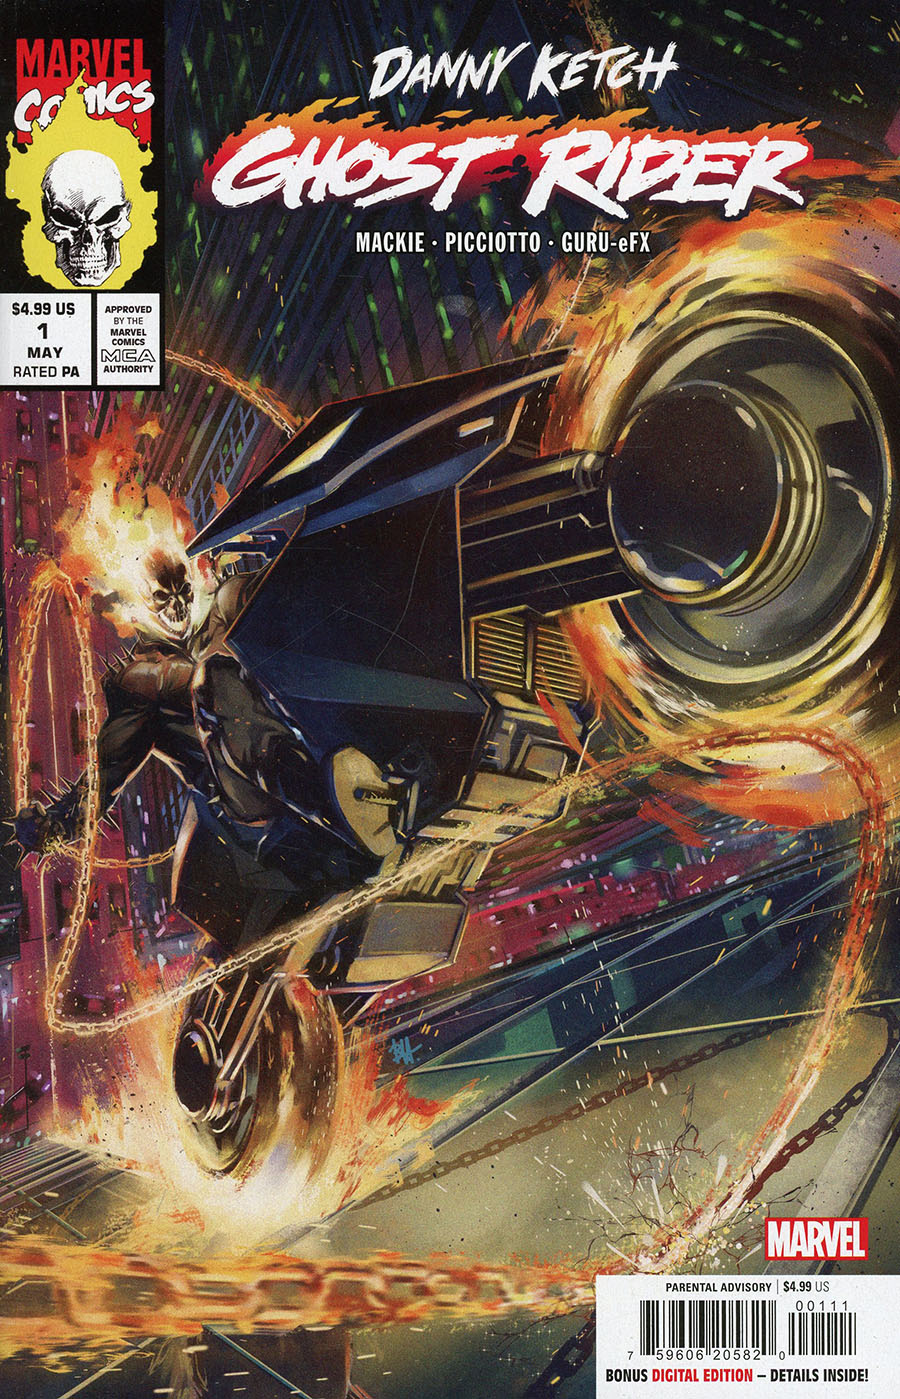 Danny Ketch Ghost Rider #1 Cover A Regular Ben Harvey Cover